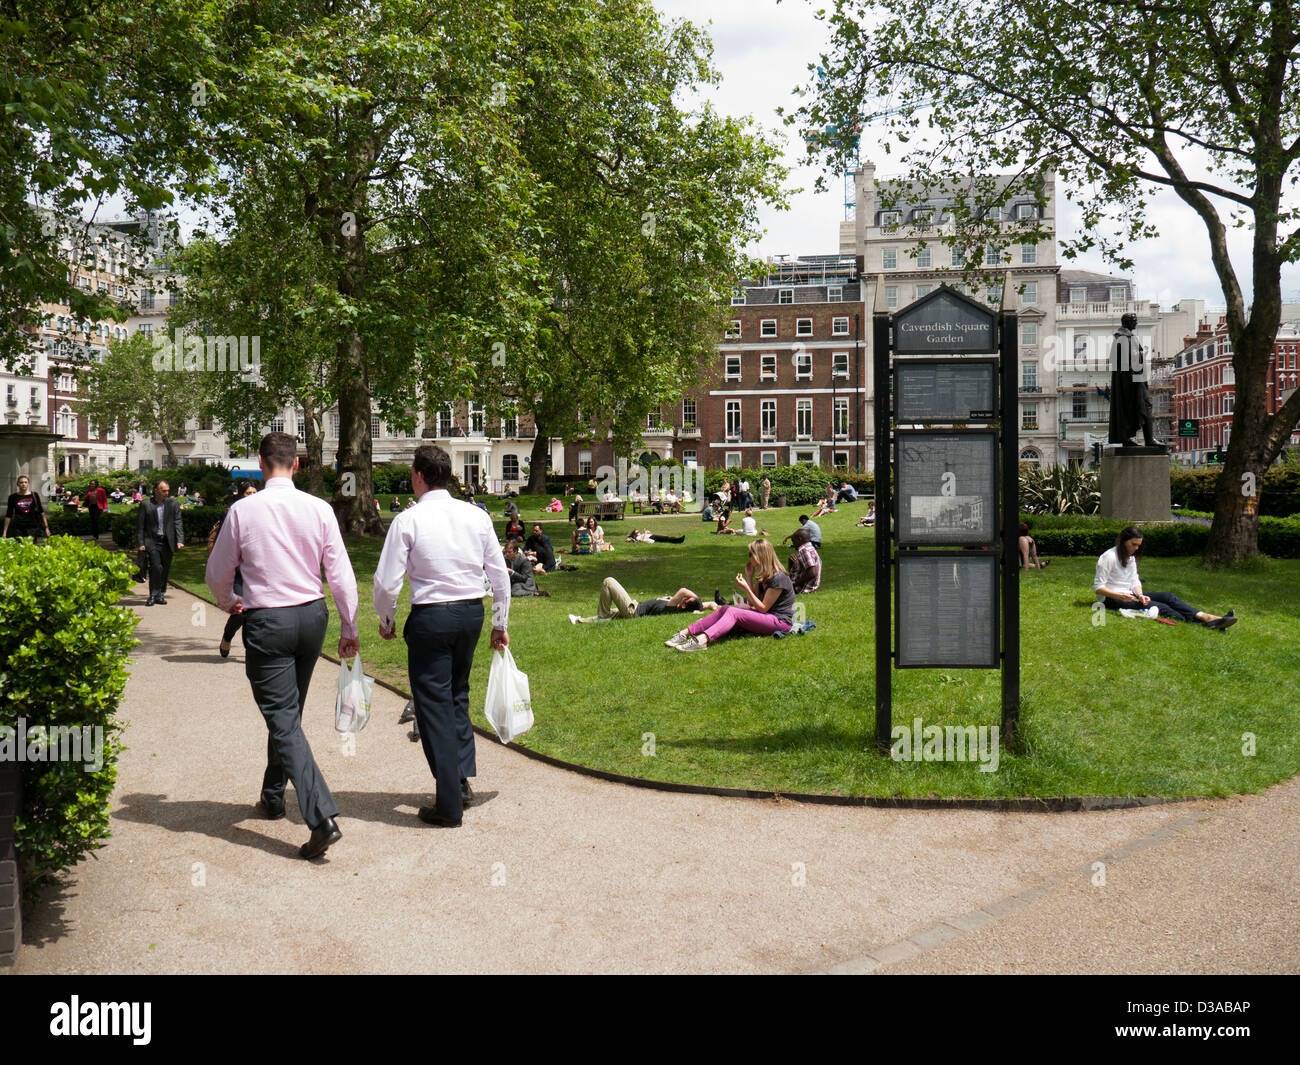 Cavendish Square Gardens in London UK Stock Photo